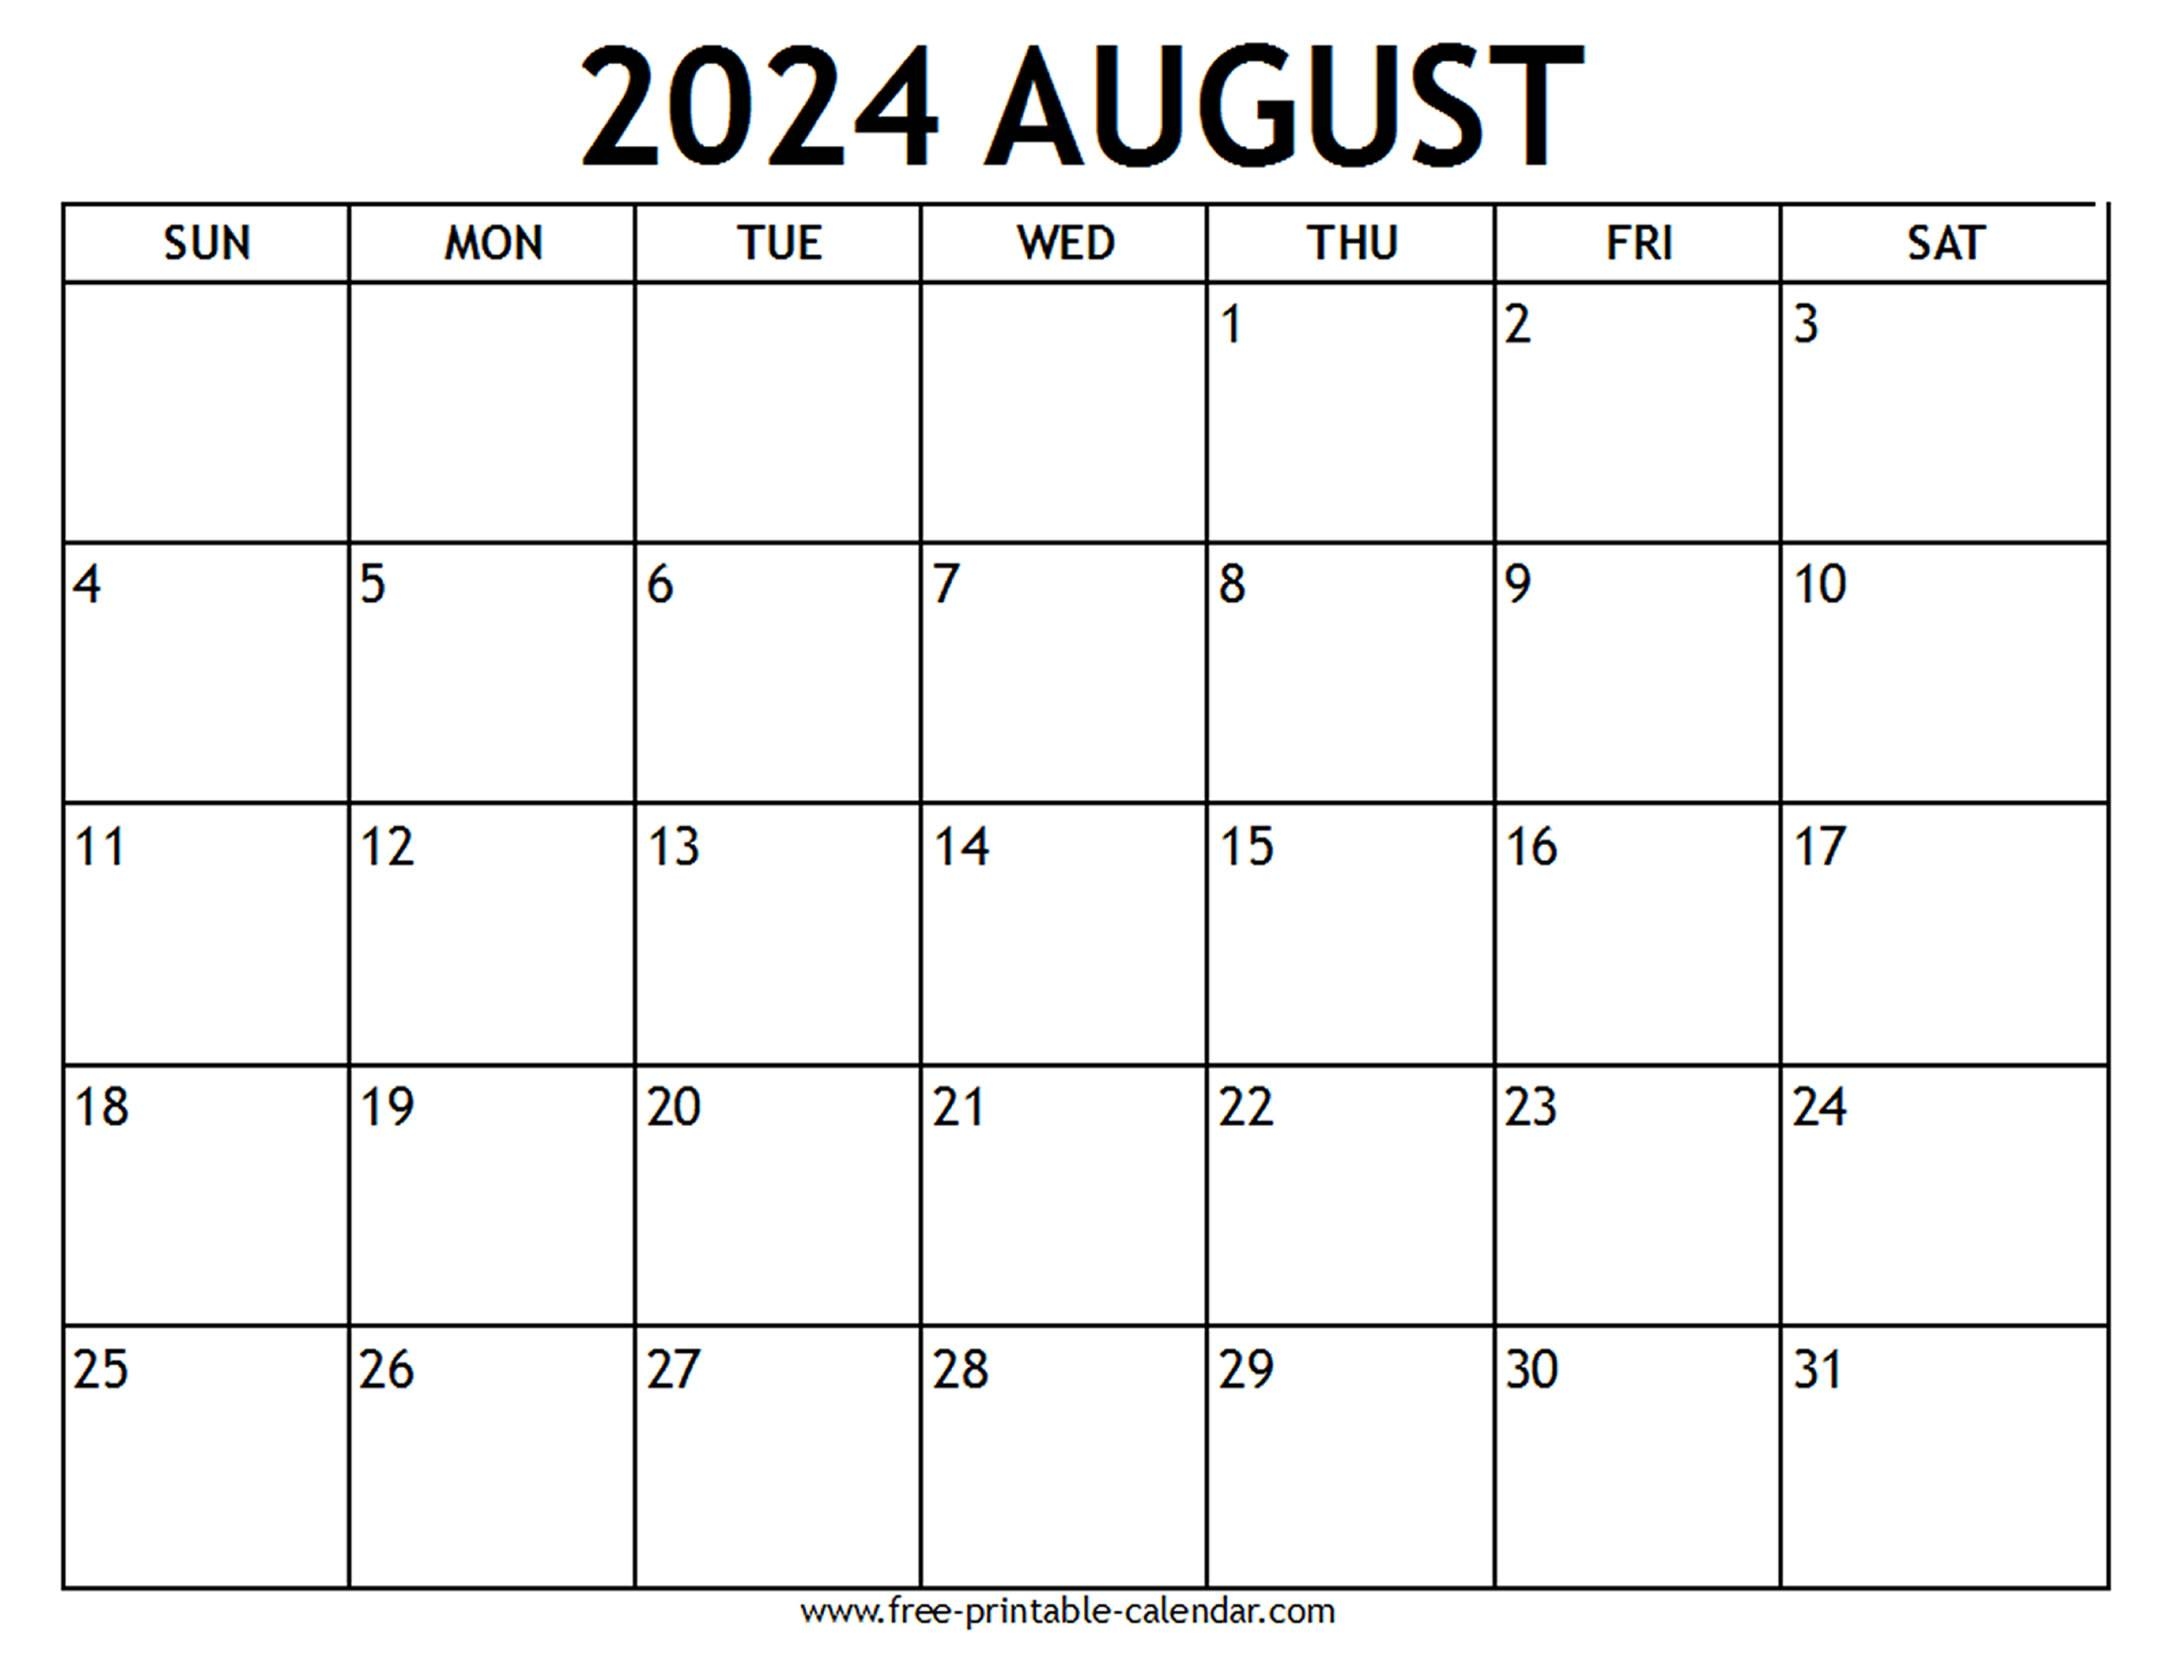 August 2024 Calendar Us Holidays - Free-Printable-Calendar inside Free Printable August 2024 Calendar Word